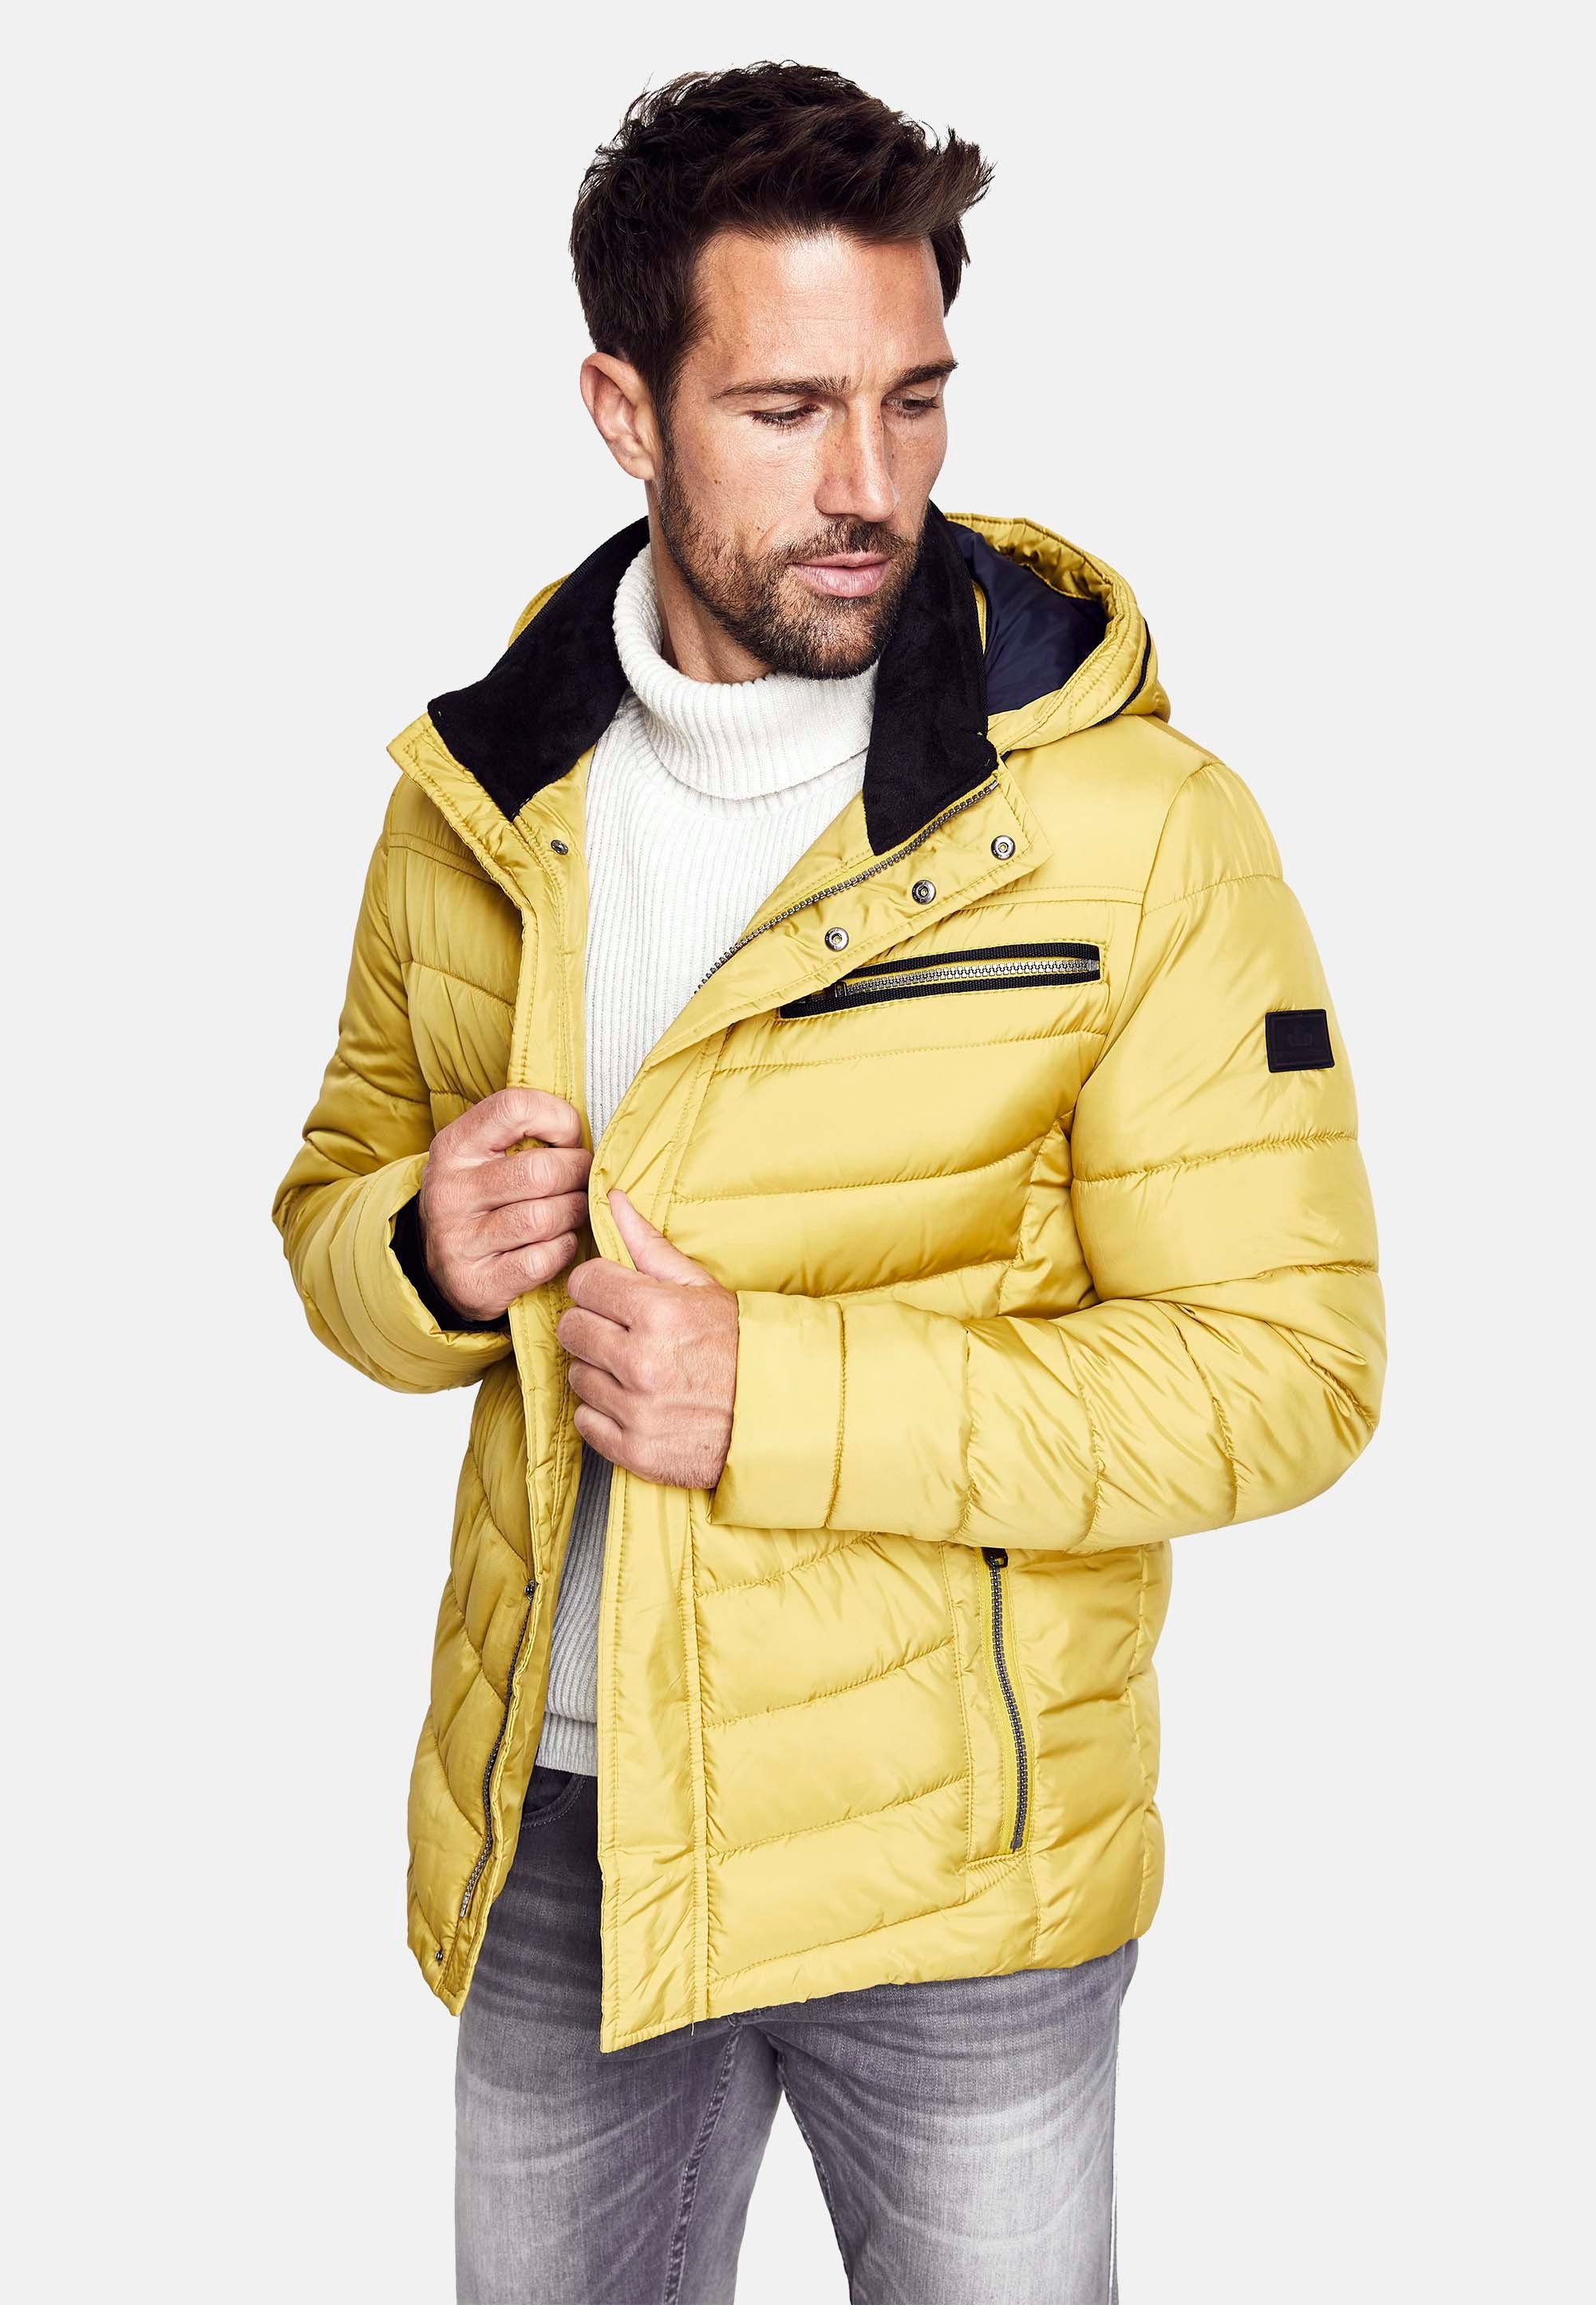 New Canadian Steppjacke Lightwear-Stepp Jacke mit abnehmbarer Kapuze,  Reißverschlusstaschen und zwei verschließbare Innentaschen